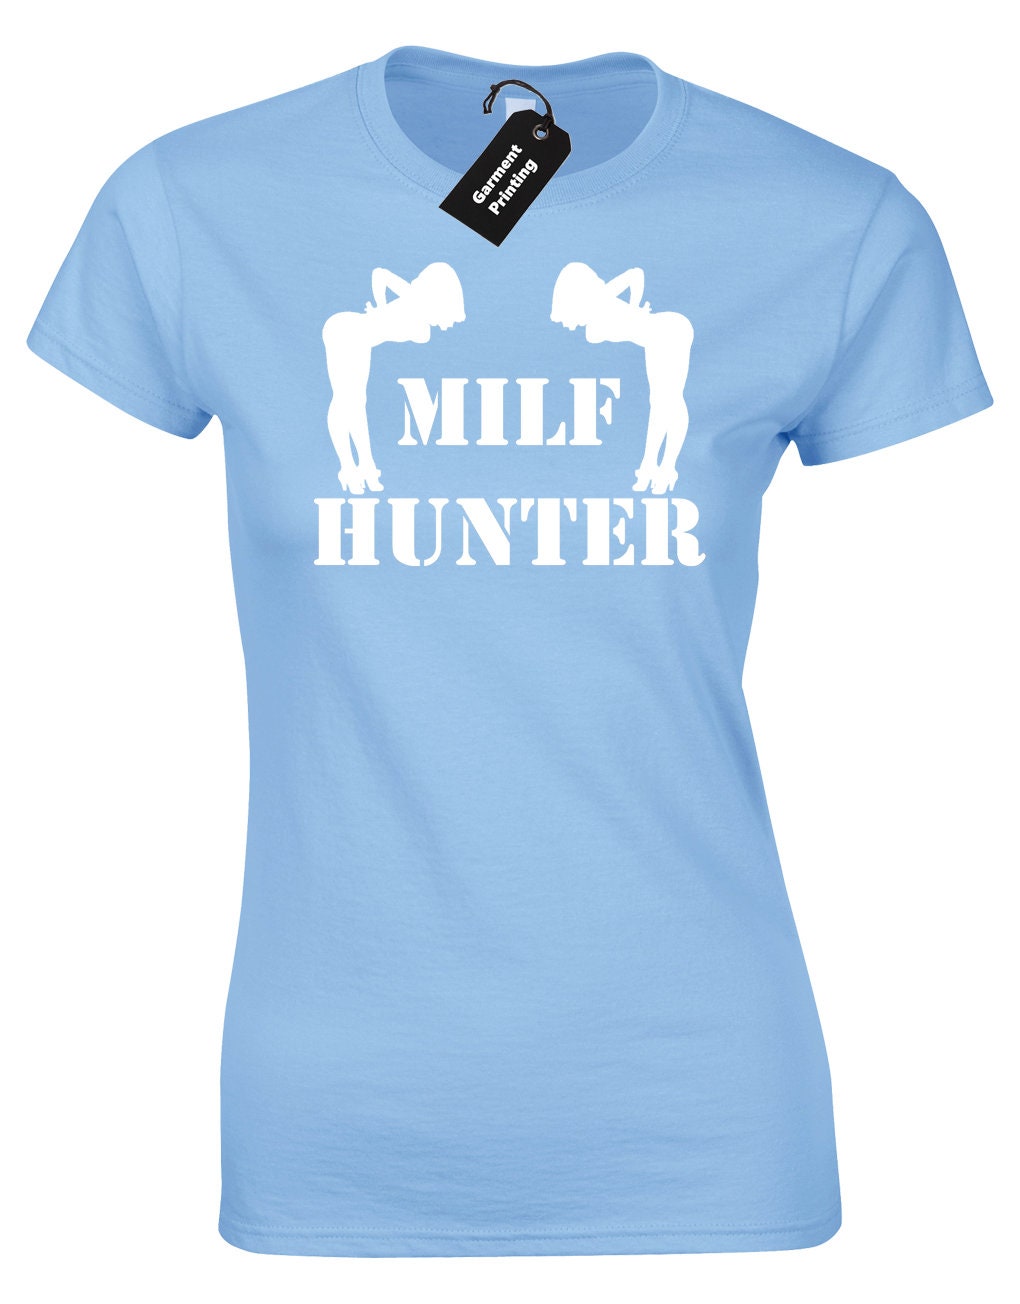 Milf Hunter Ladies T-shirt Funny Rude Design Joke Explicit photo picture